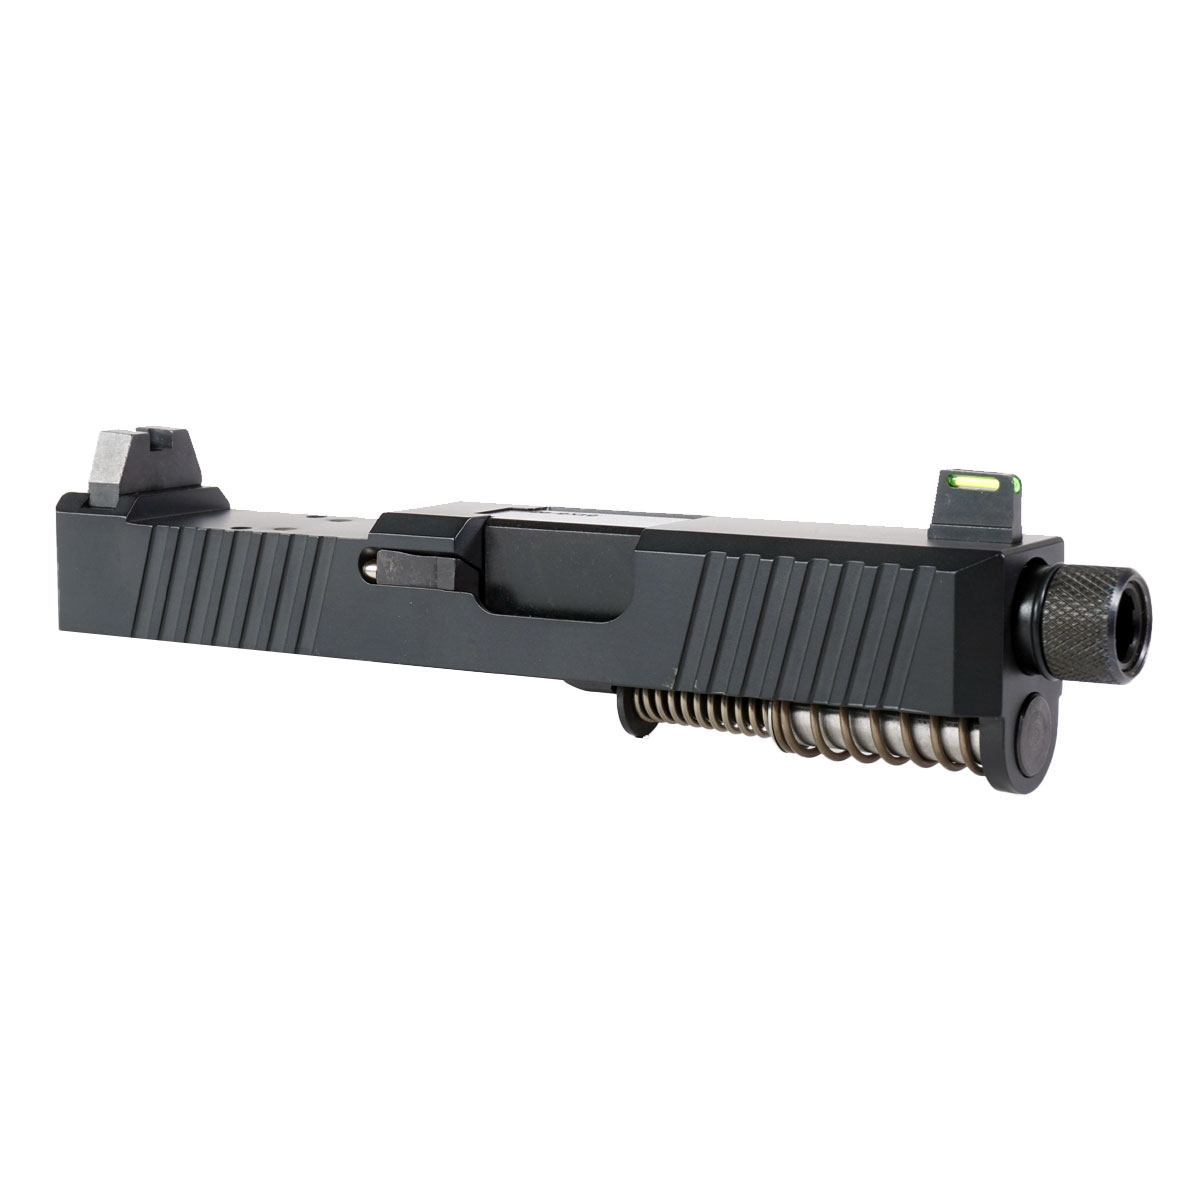 MMC 'Creature Fear' 9mm Complete Slide Kit - Glock 26 Gen 1-3 Compatible